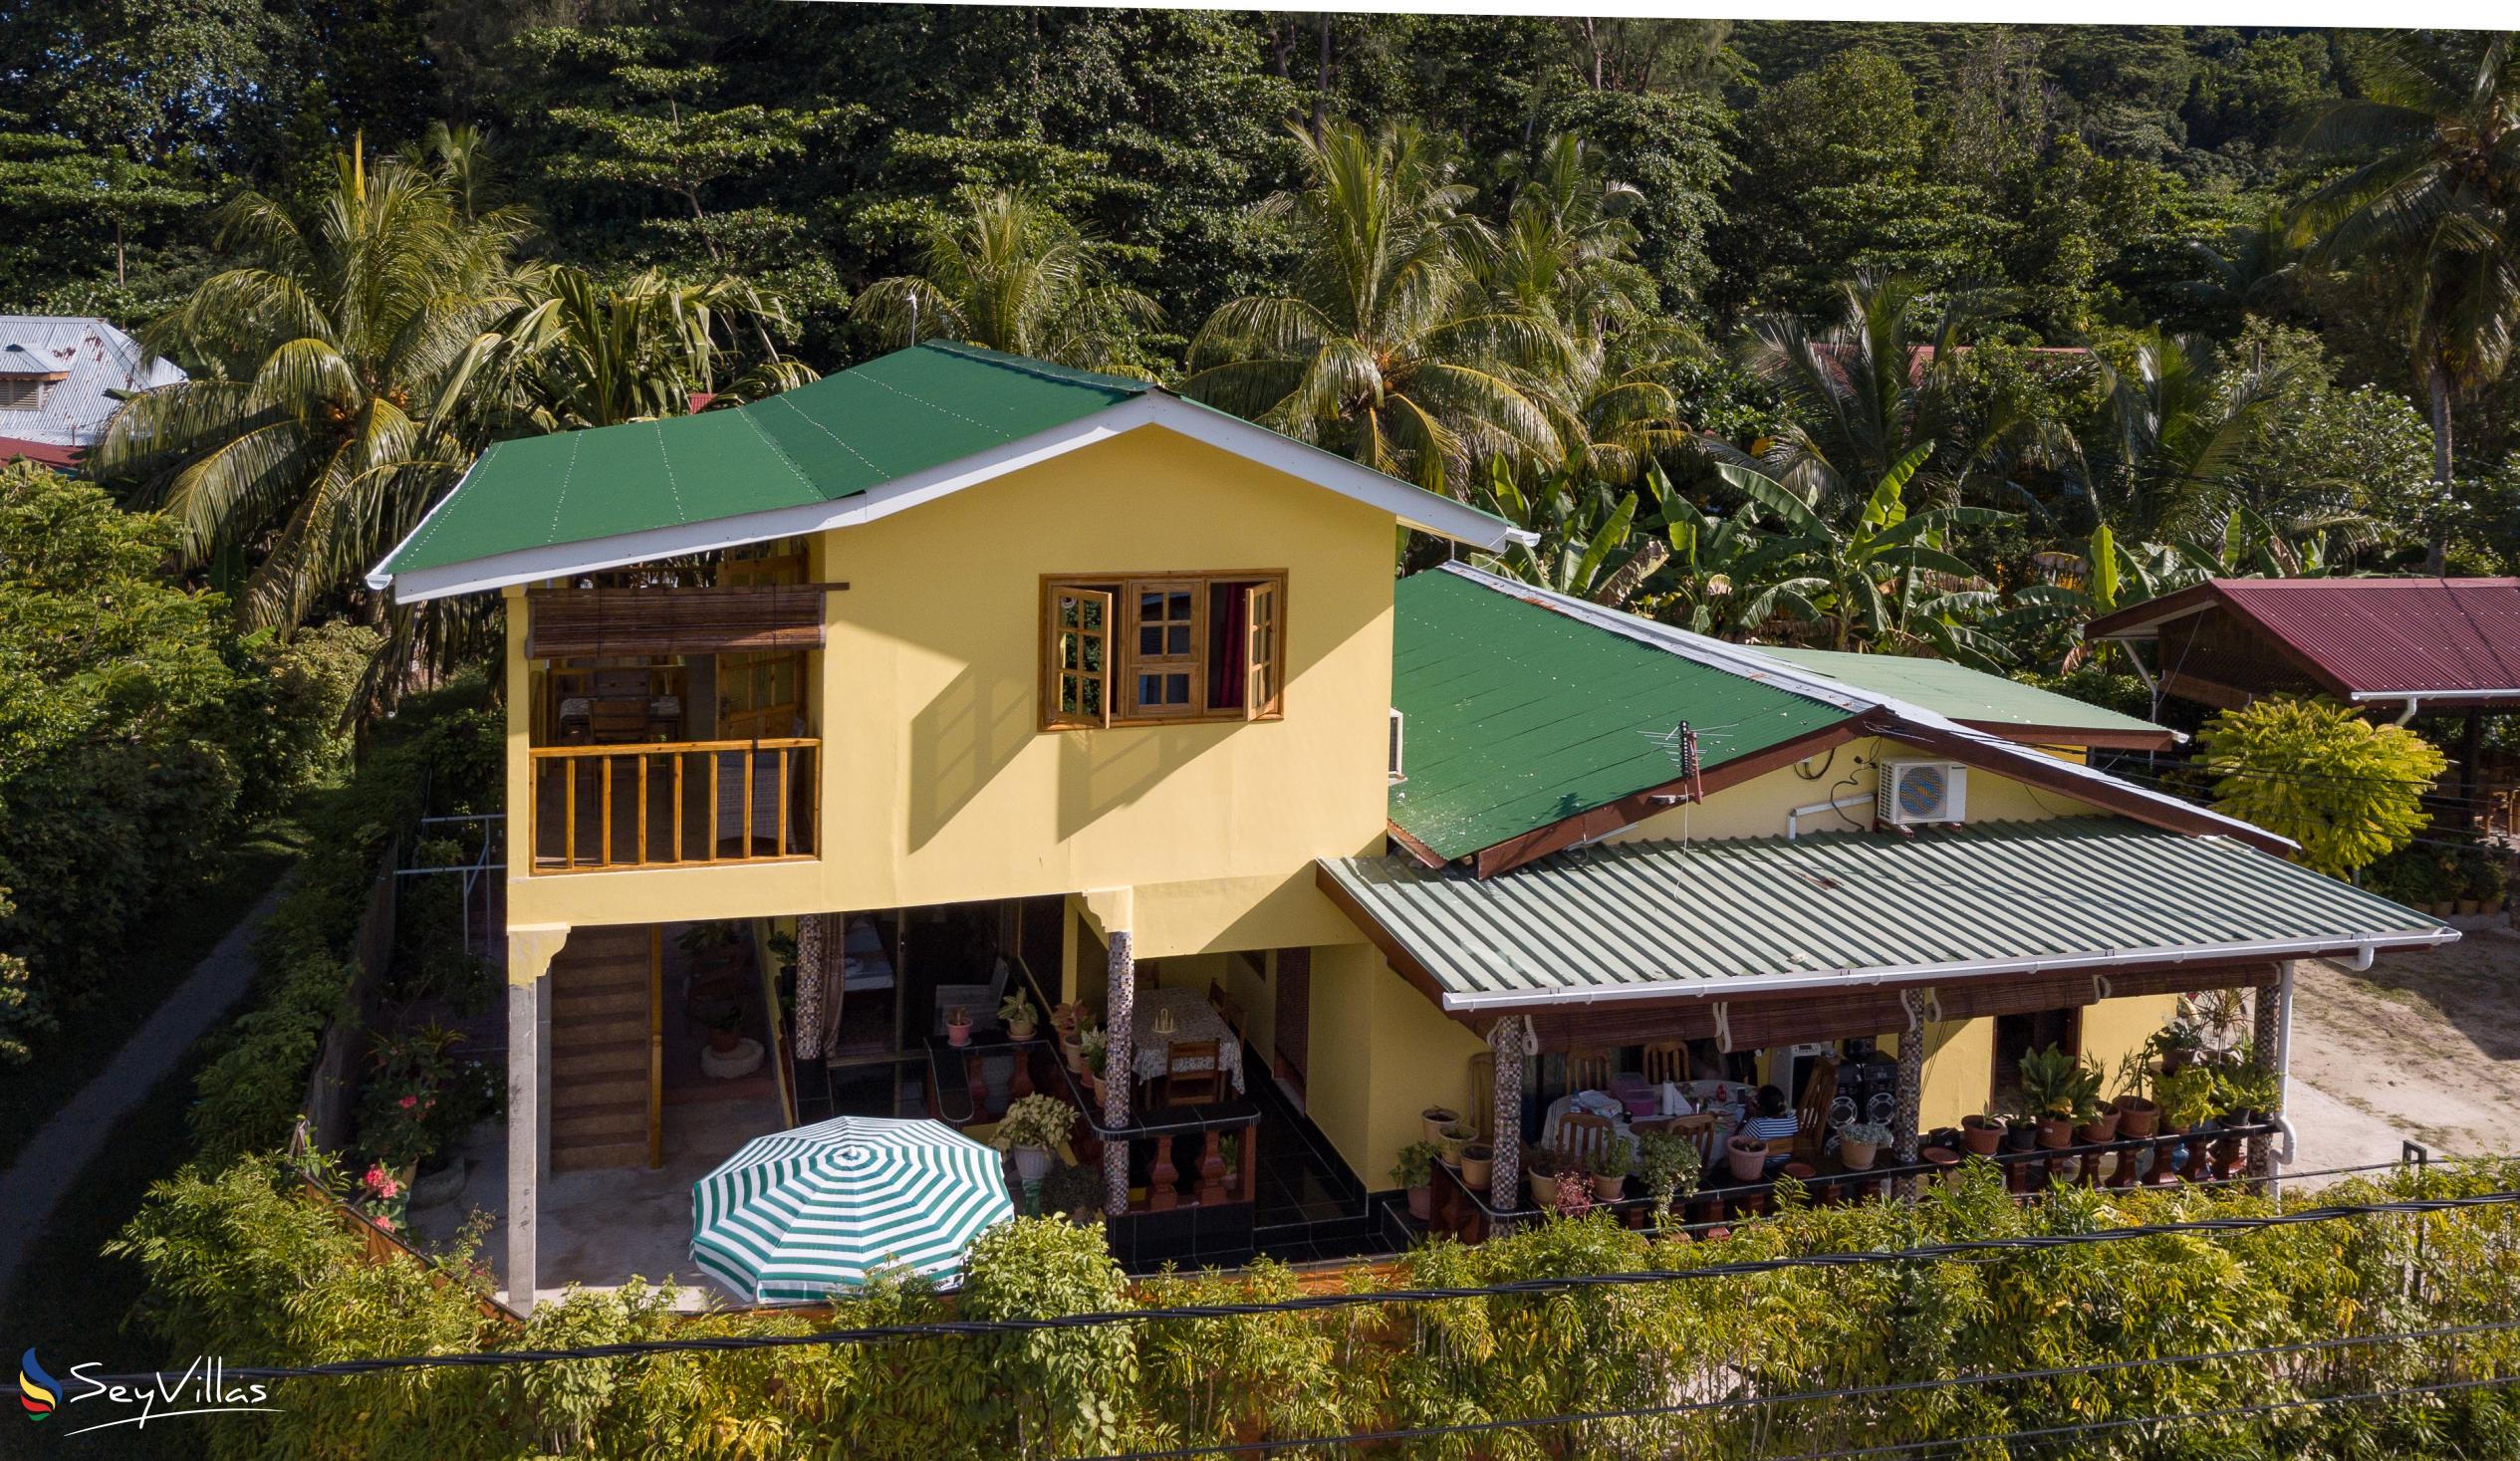 Foto 5: Dream Holiday Self Catering - Aussenbereich - La Digue (Seychellen)